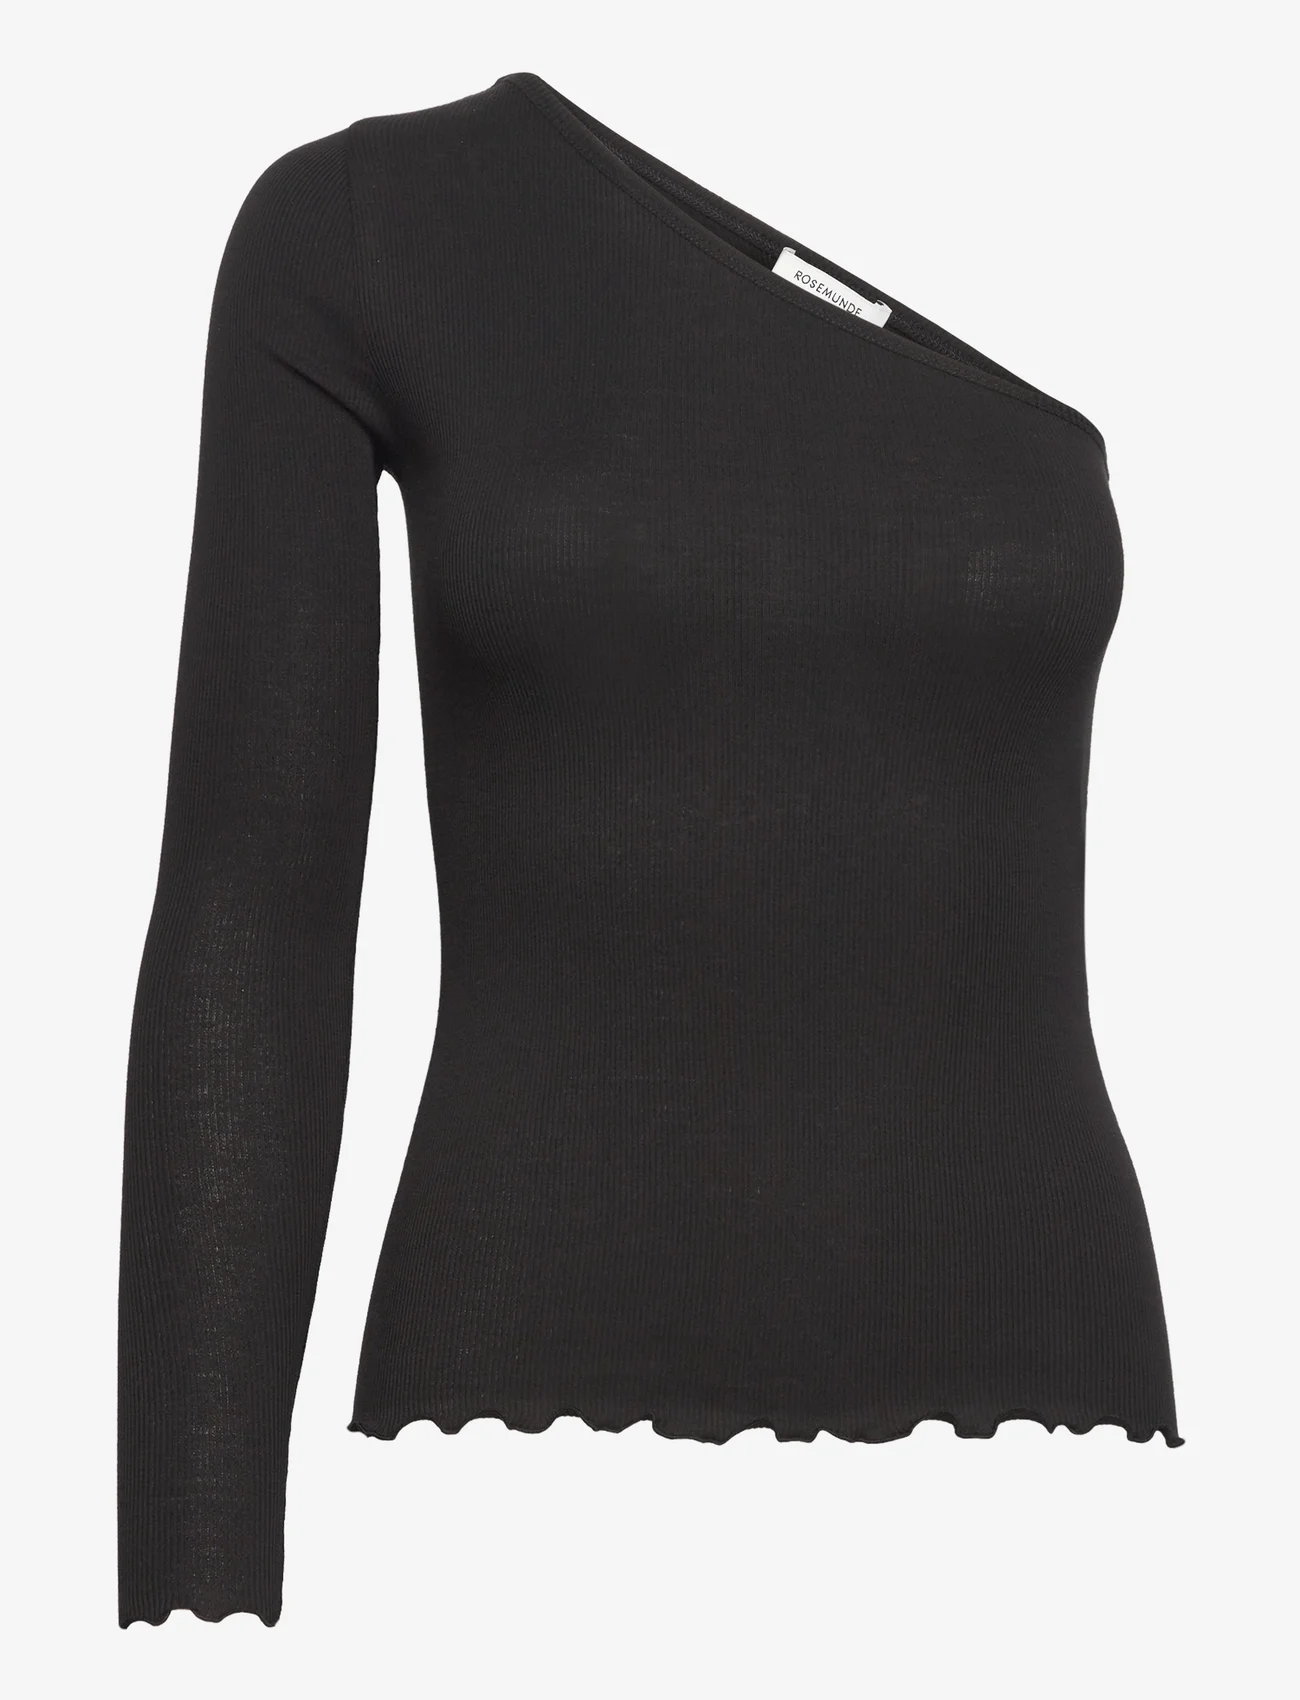 Rosemunde - Organic t-shirt - langärmlige tops - black - 0